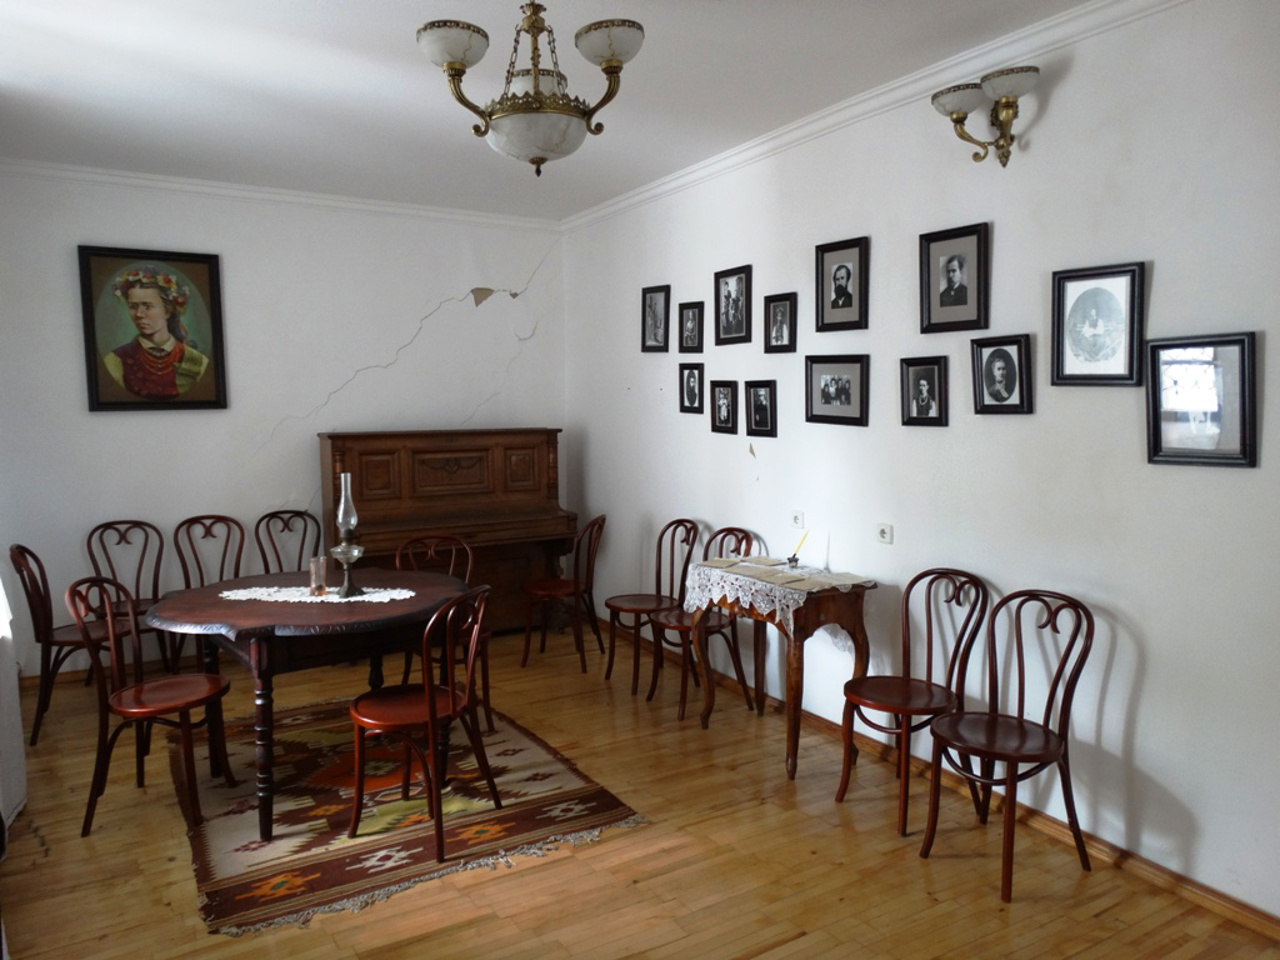 Lesyna Living Room Museum (Kosachi House), Lutsk